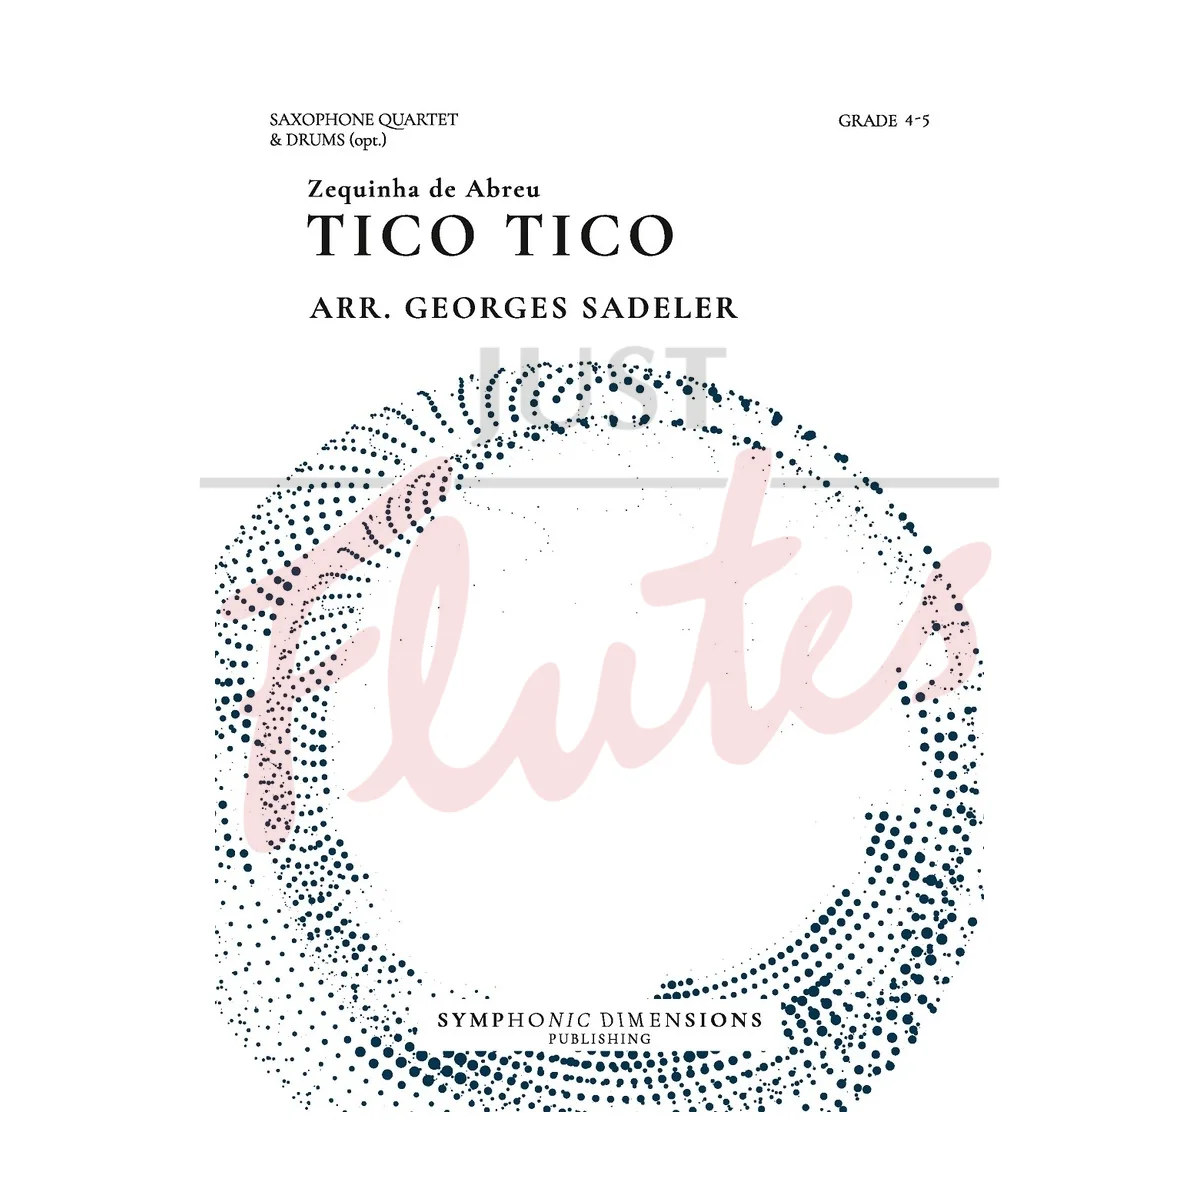 Tico Tico for Saxophone Quartet with optional Drums